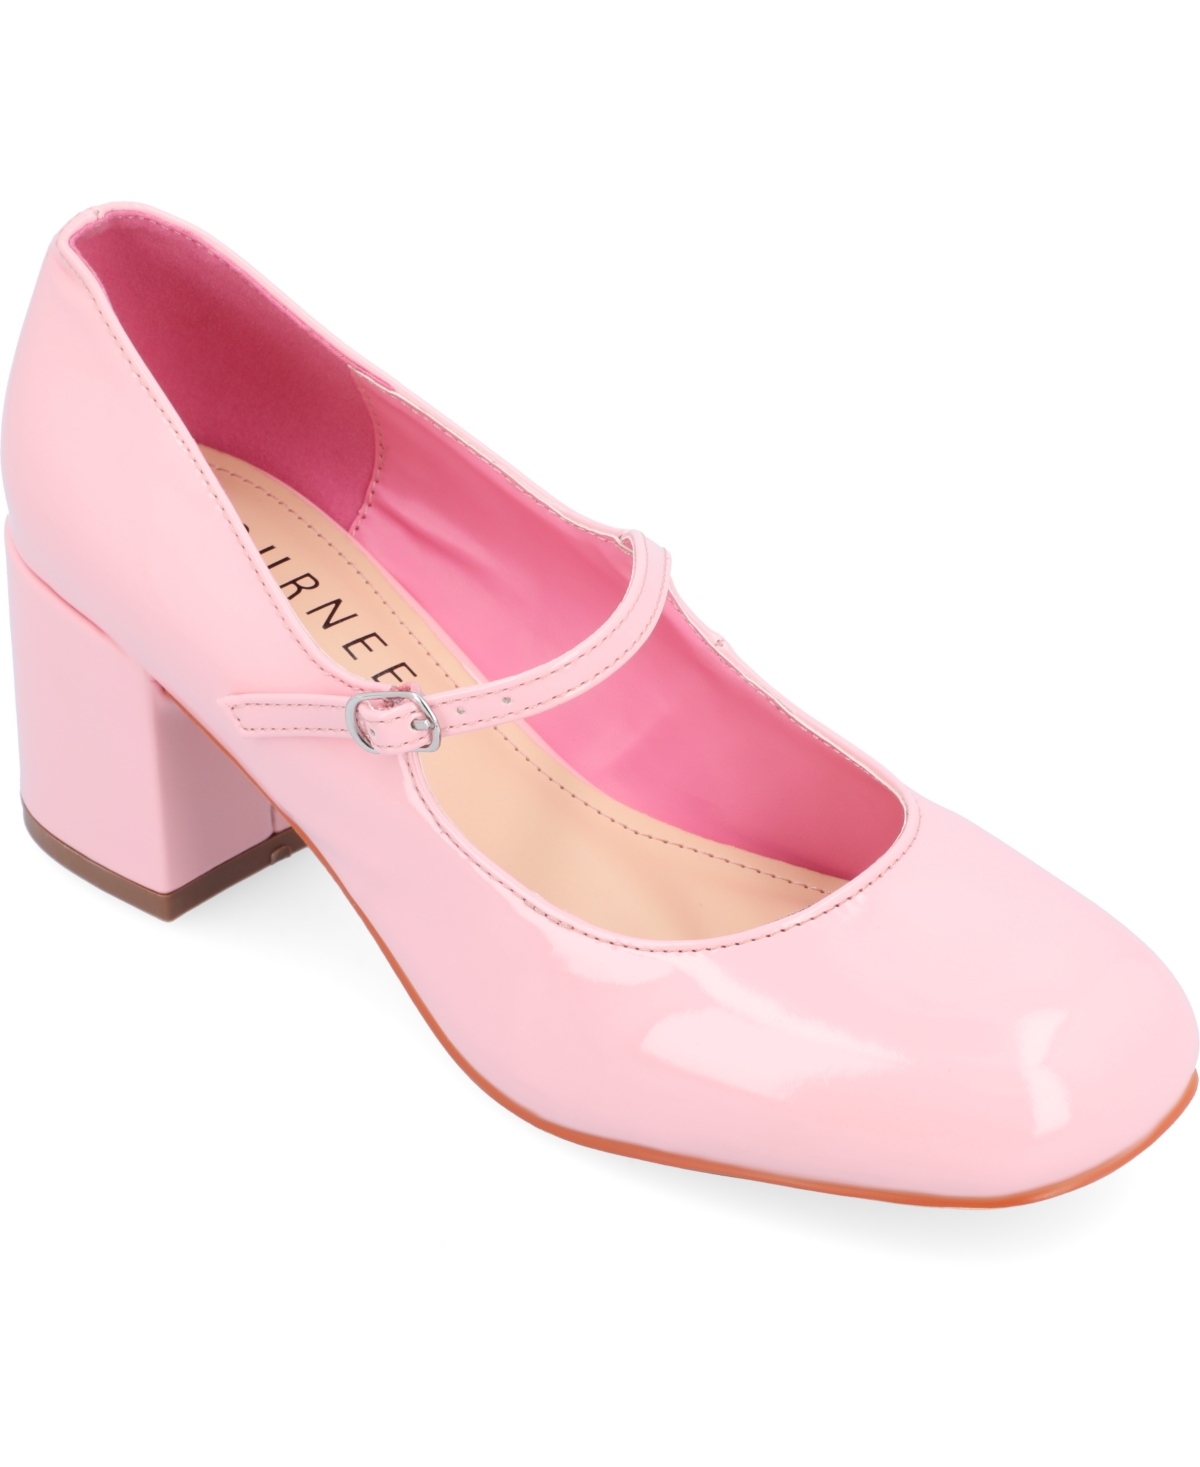 Vintage Shoes, Vintage Style Shoes Journee Collection Womens Okenna Heels - Pink $74.99 AT vintagedancer.com